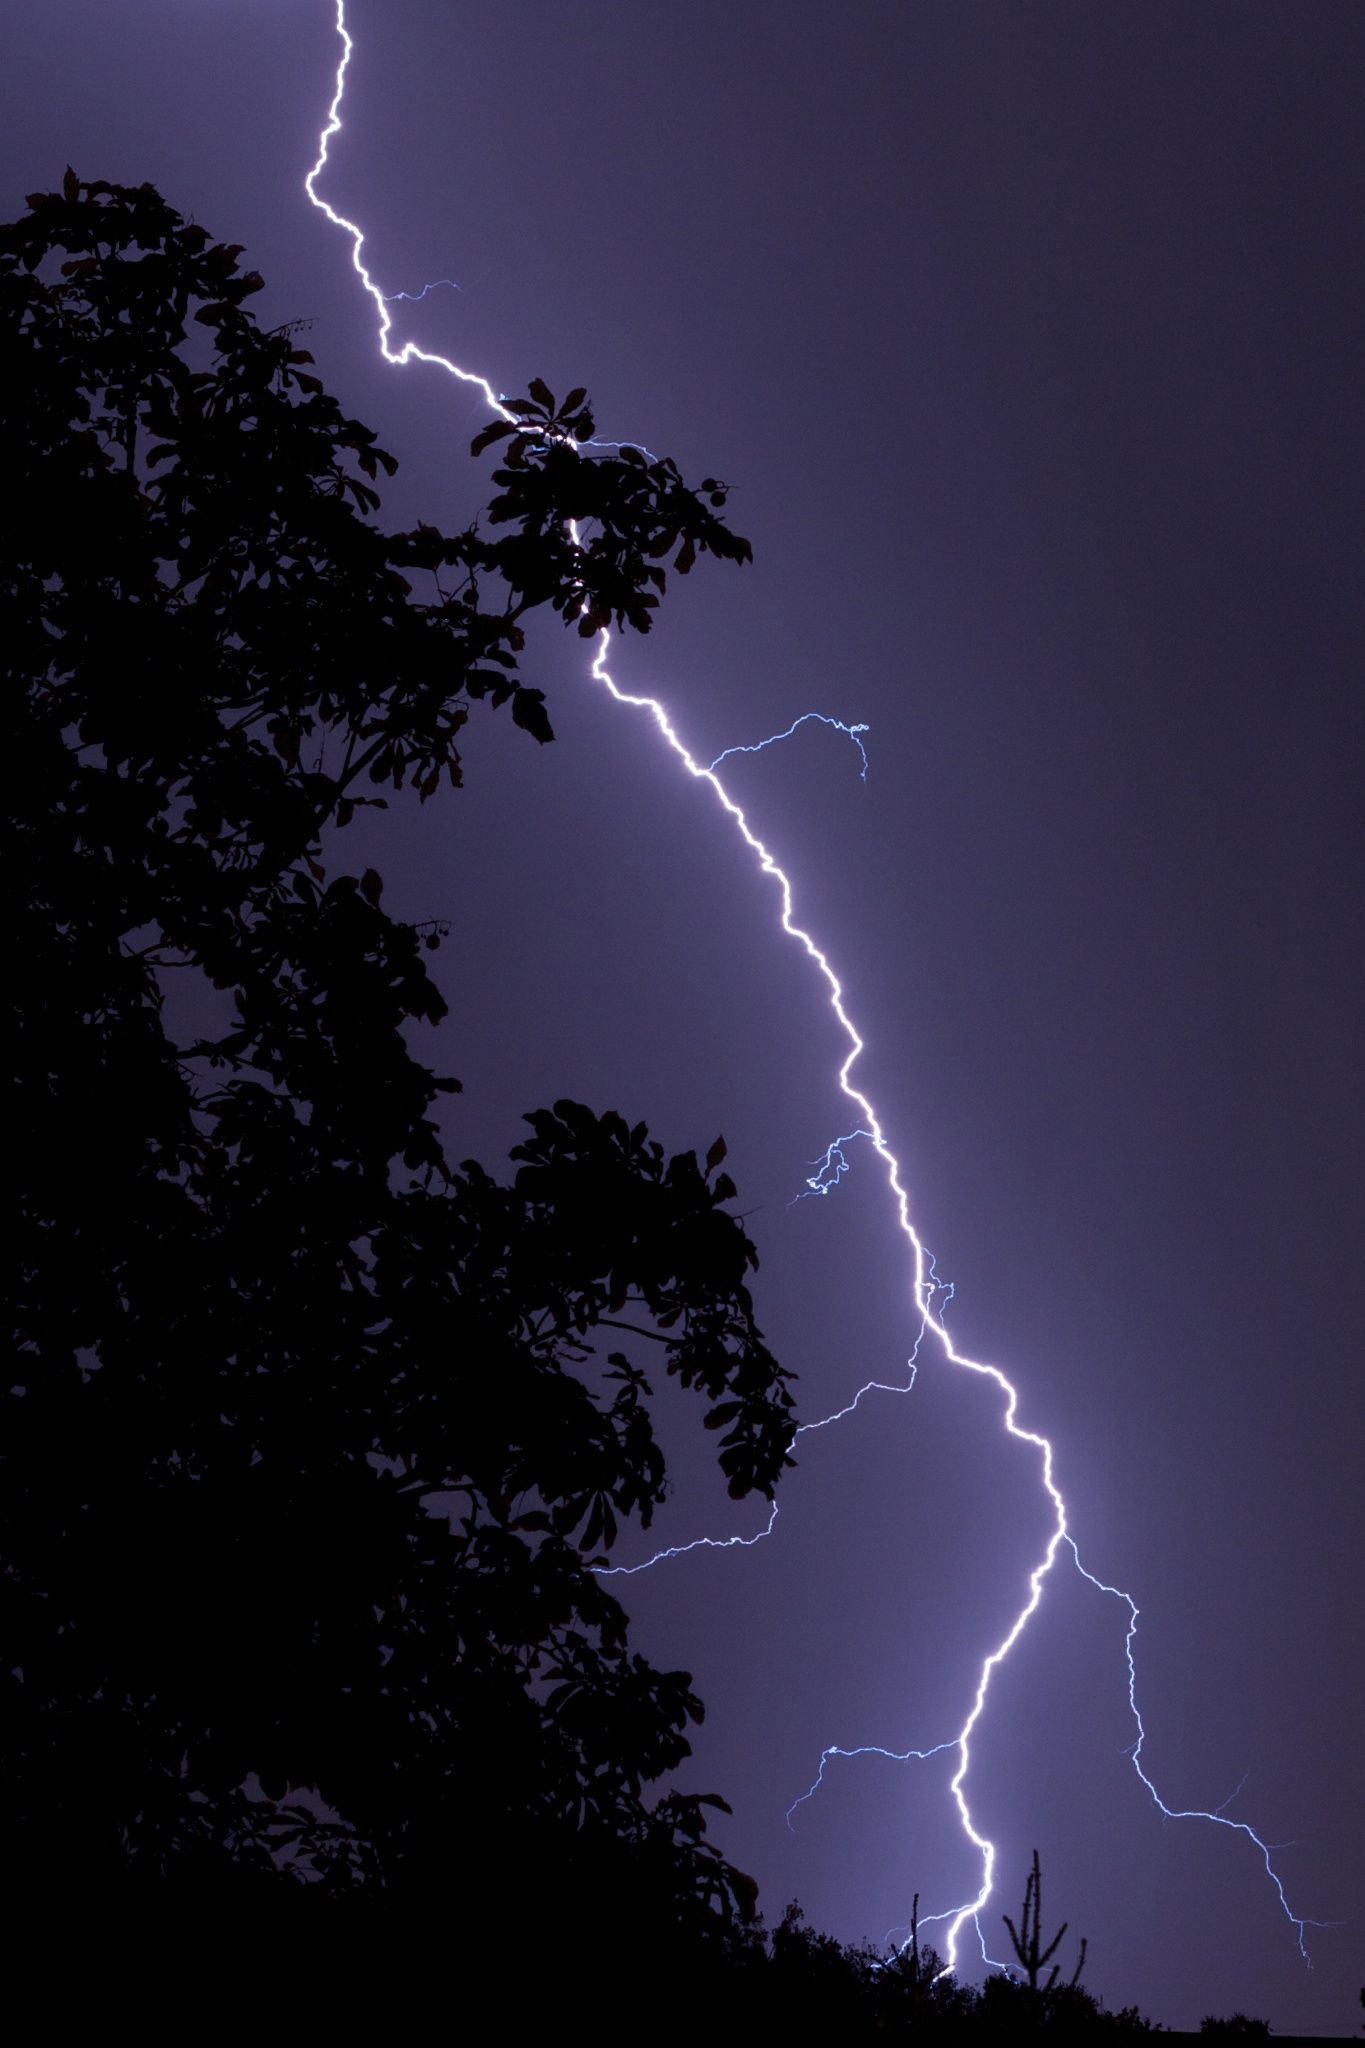 A lightning bolt is seen in the sky - Storm, lightning